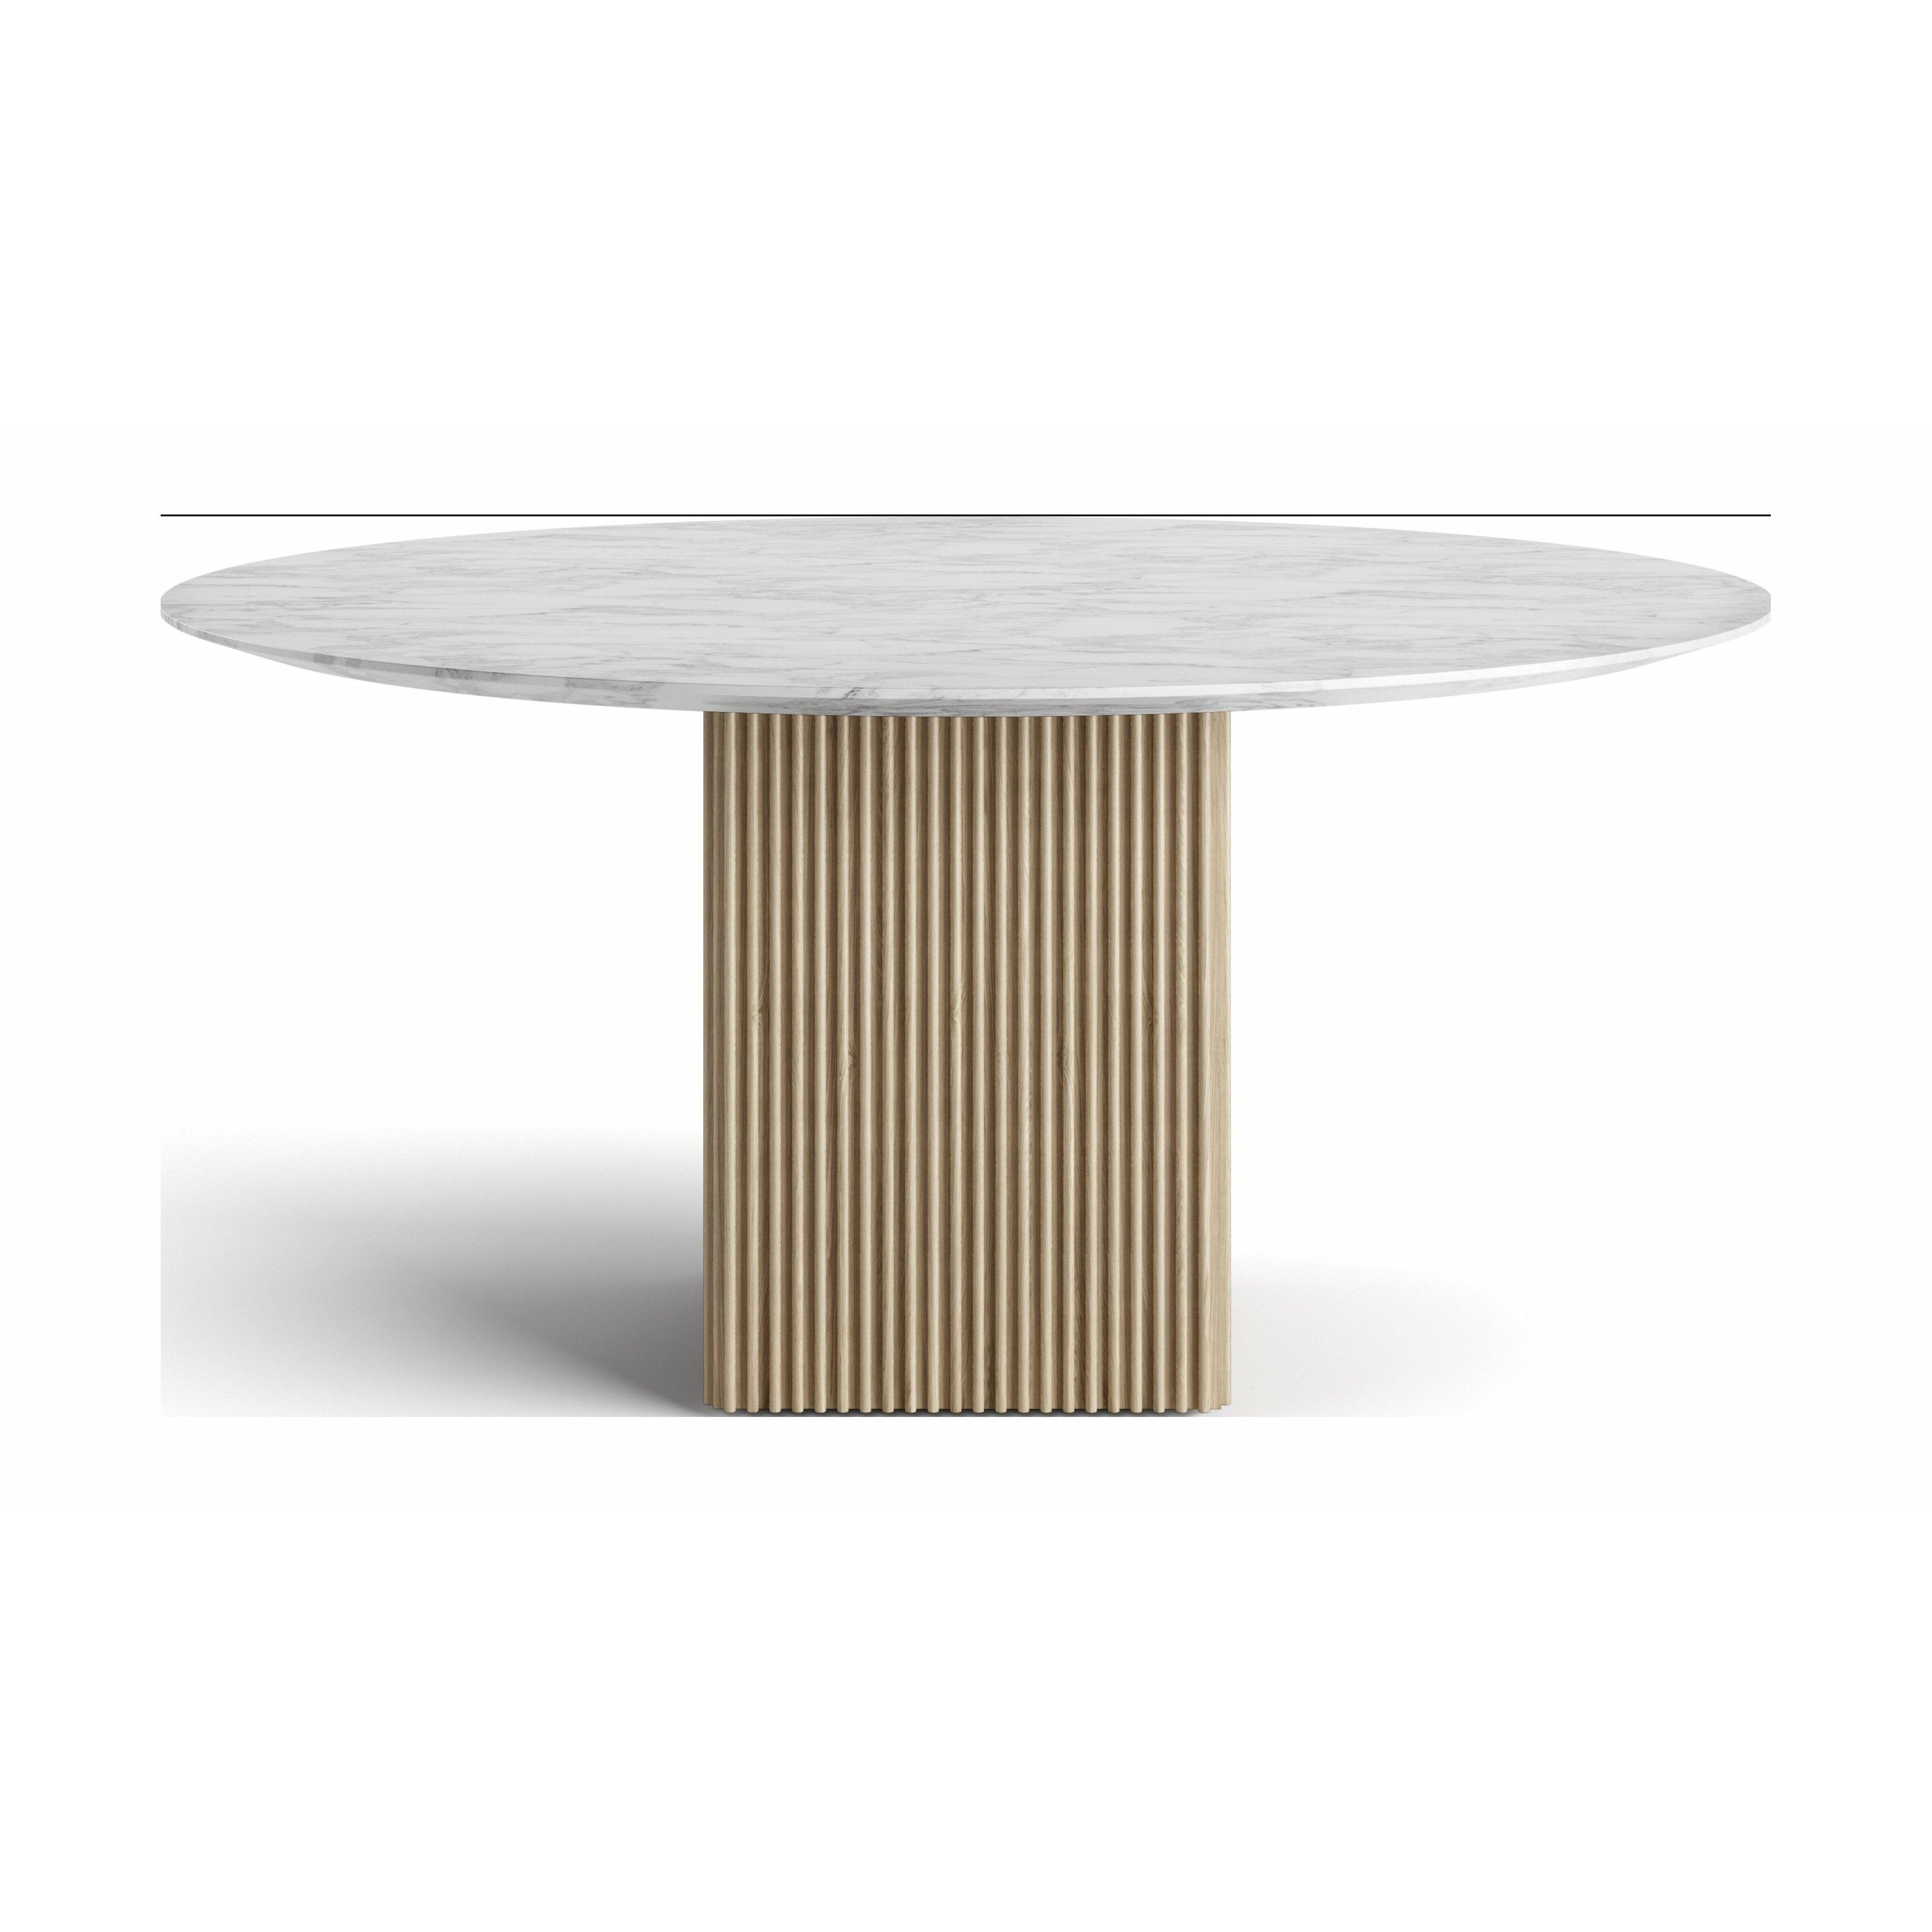 Dk3 Ten Round Dining Table Marble Carrara/Oak White Oiled, ø150 Cm